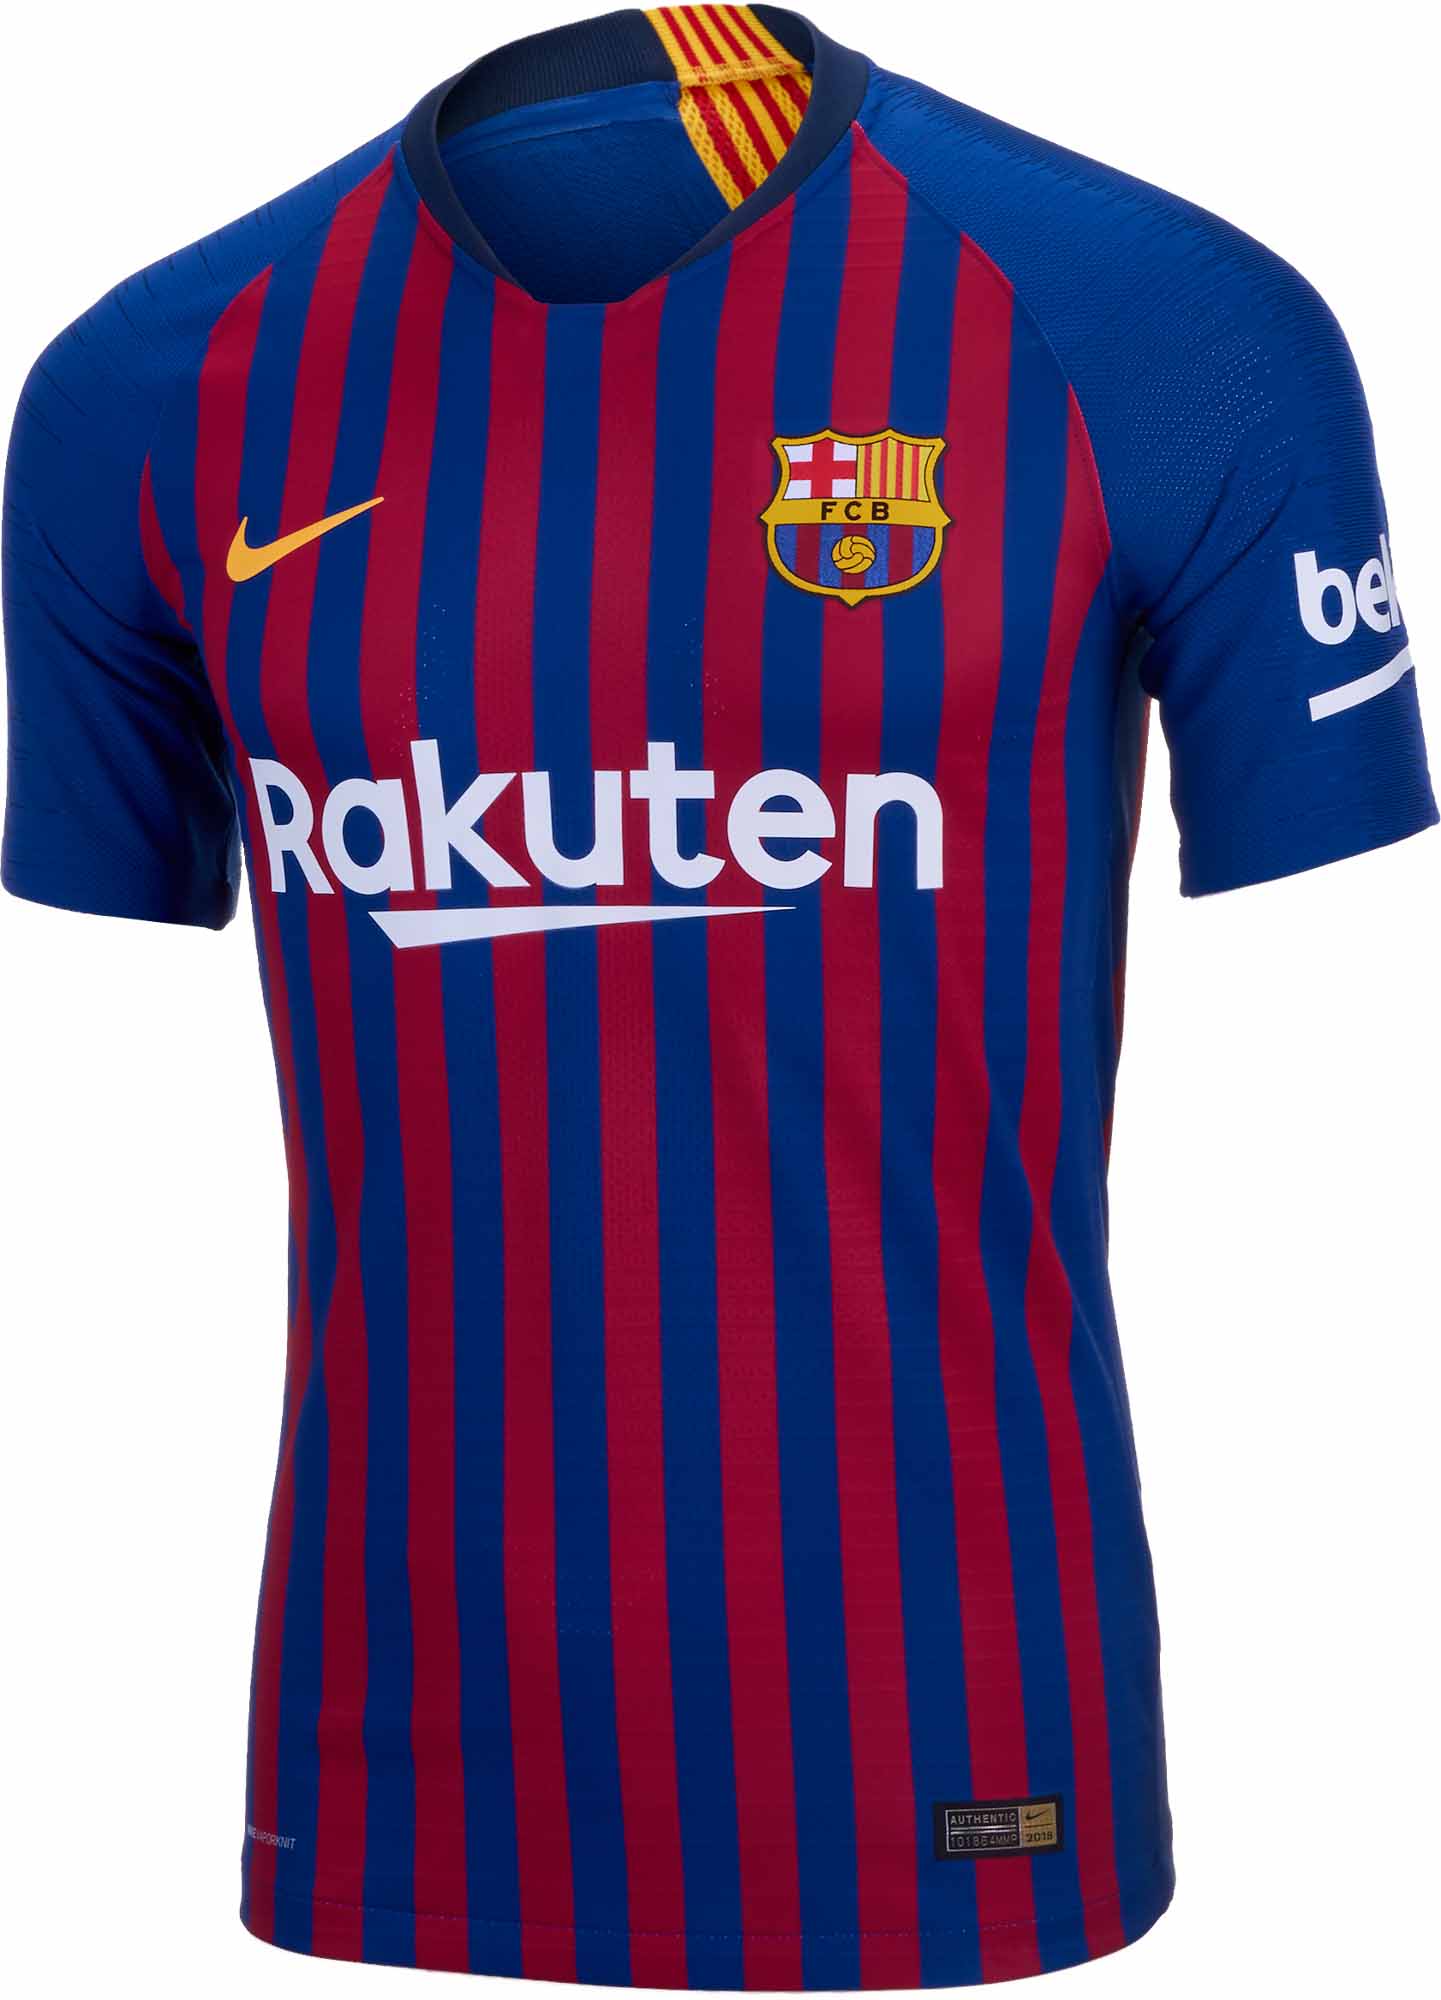 2018/19 Nike Barcelona Home Match Jersey SoccerPro